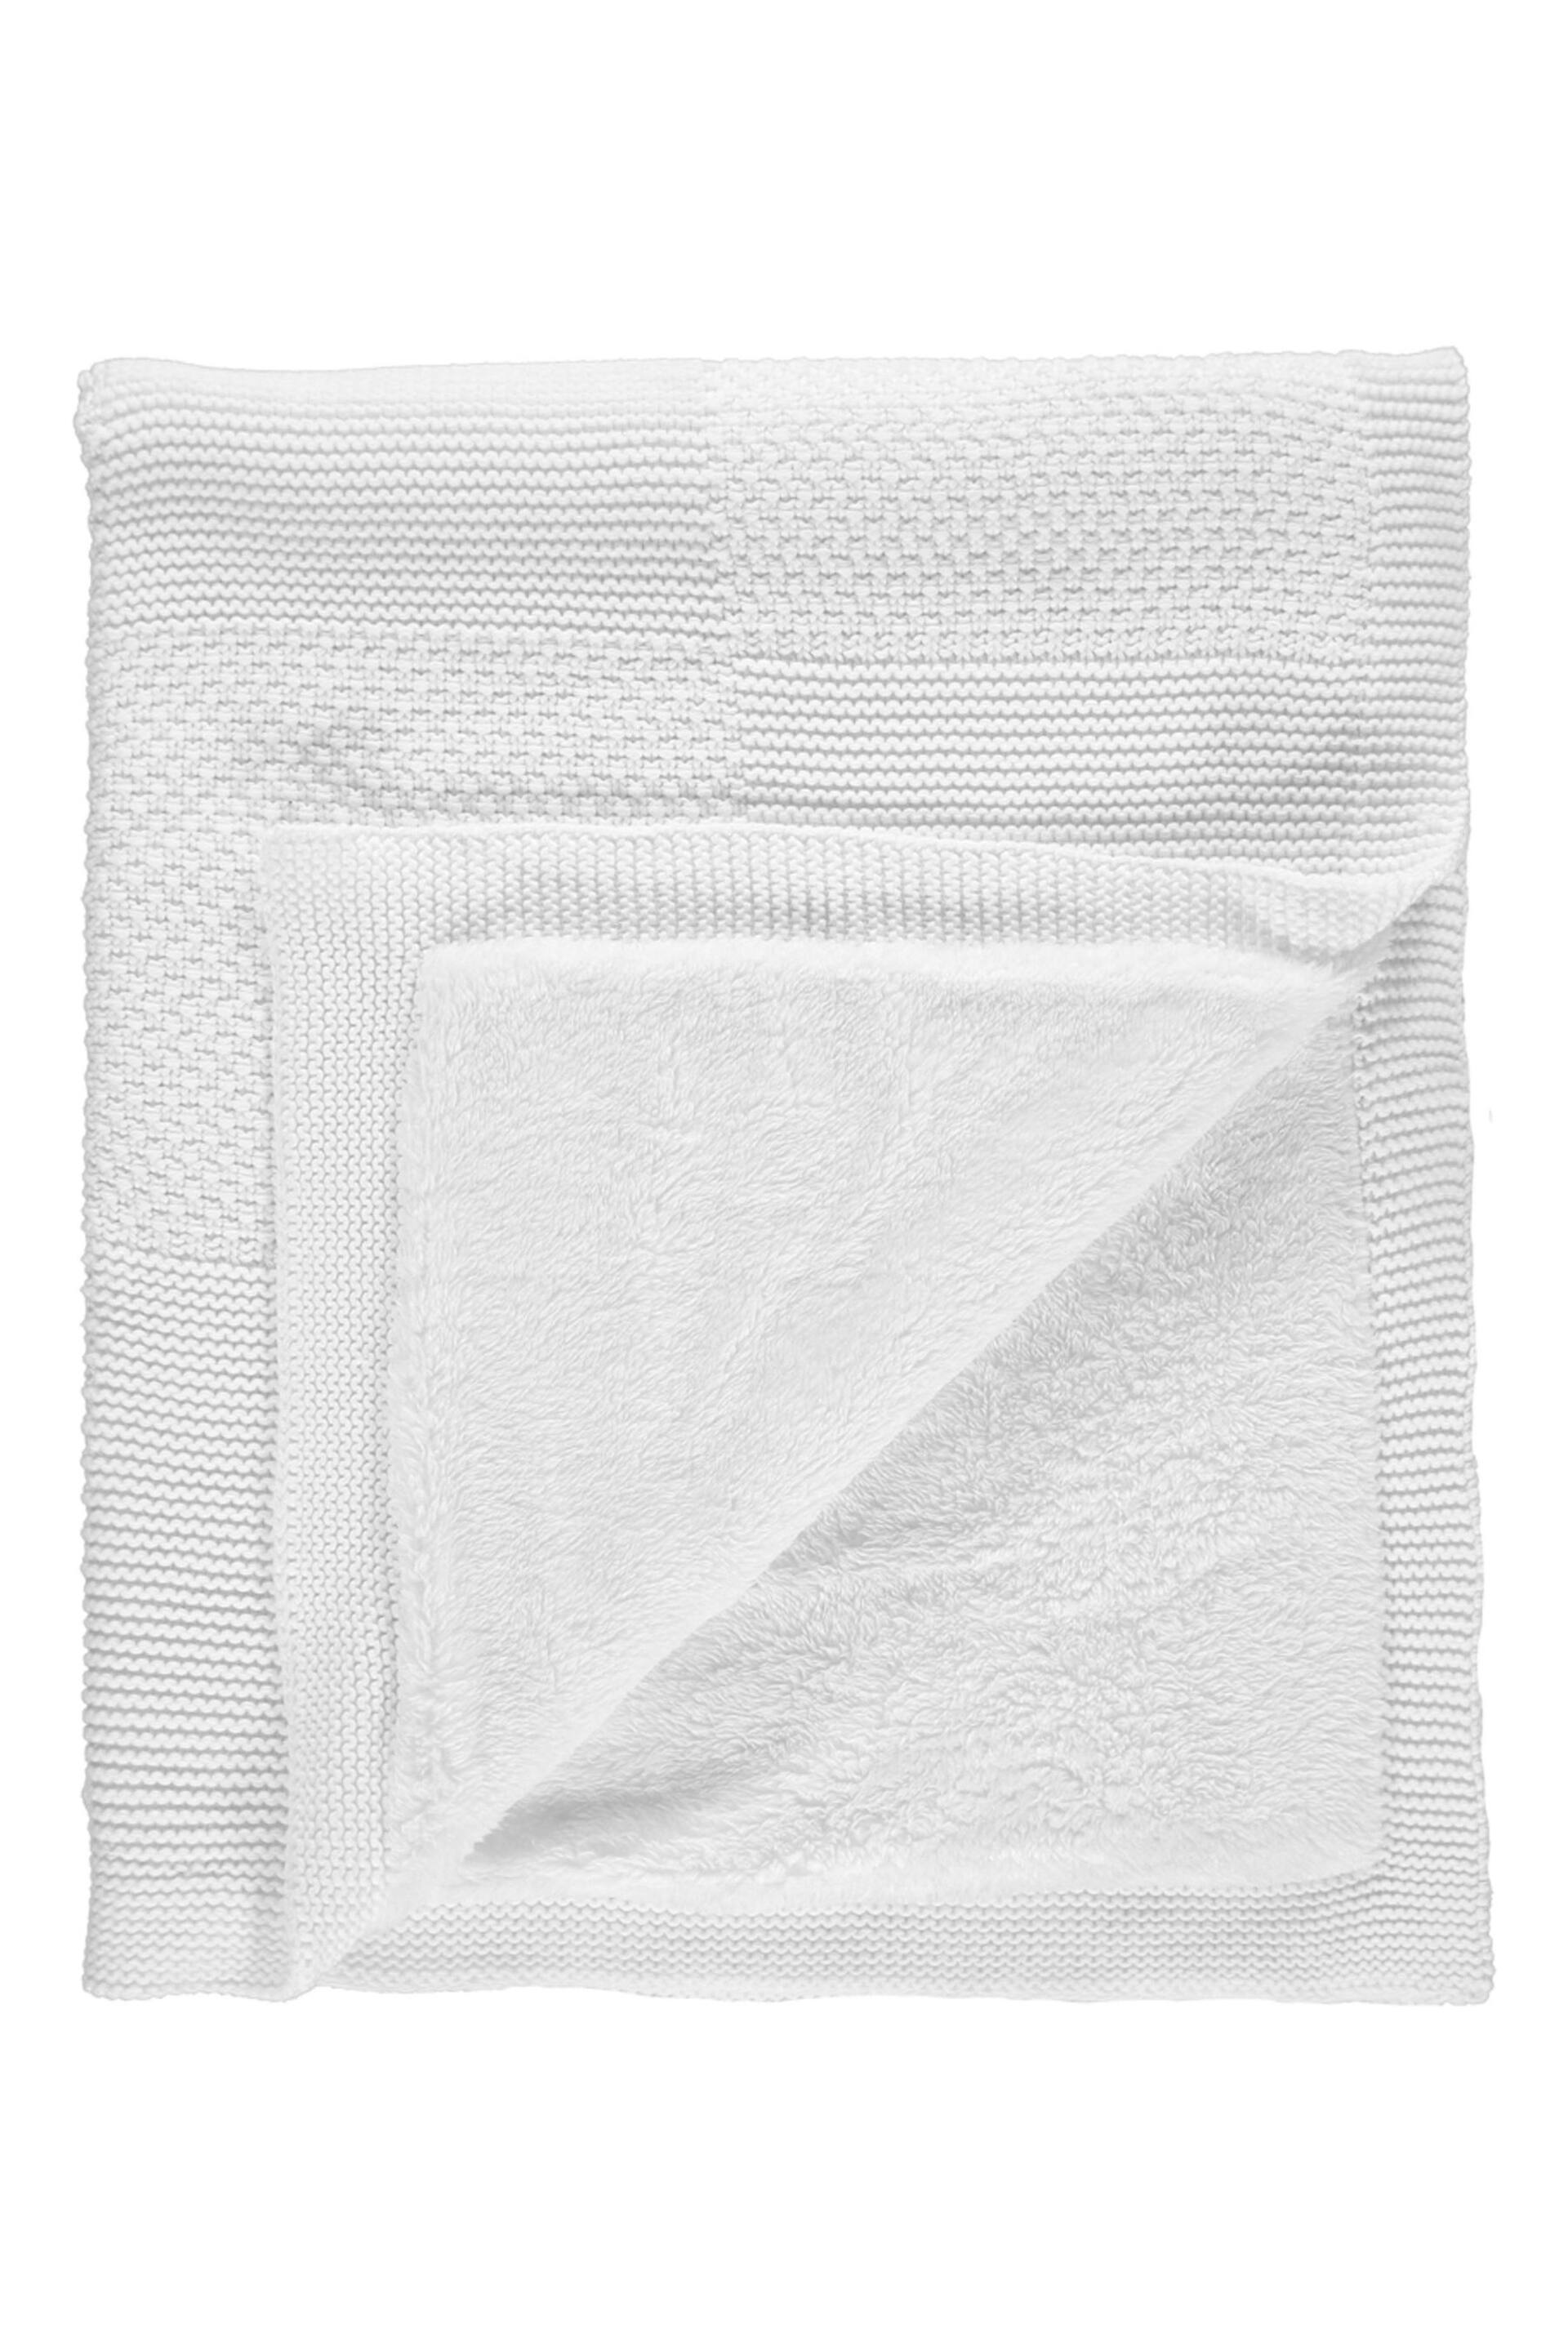 White Plush Knitted Blanket - Image 2 of 3